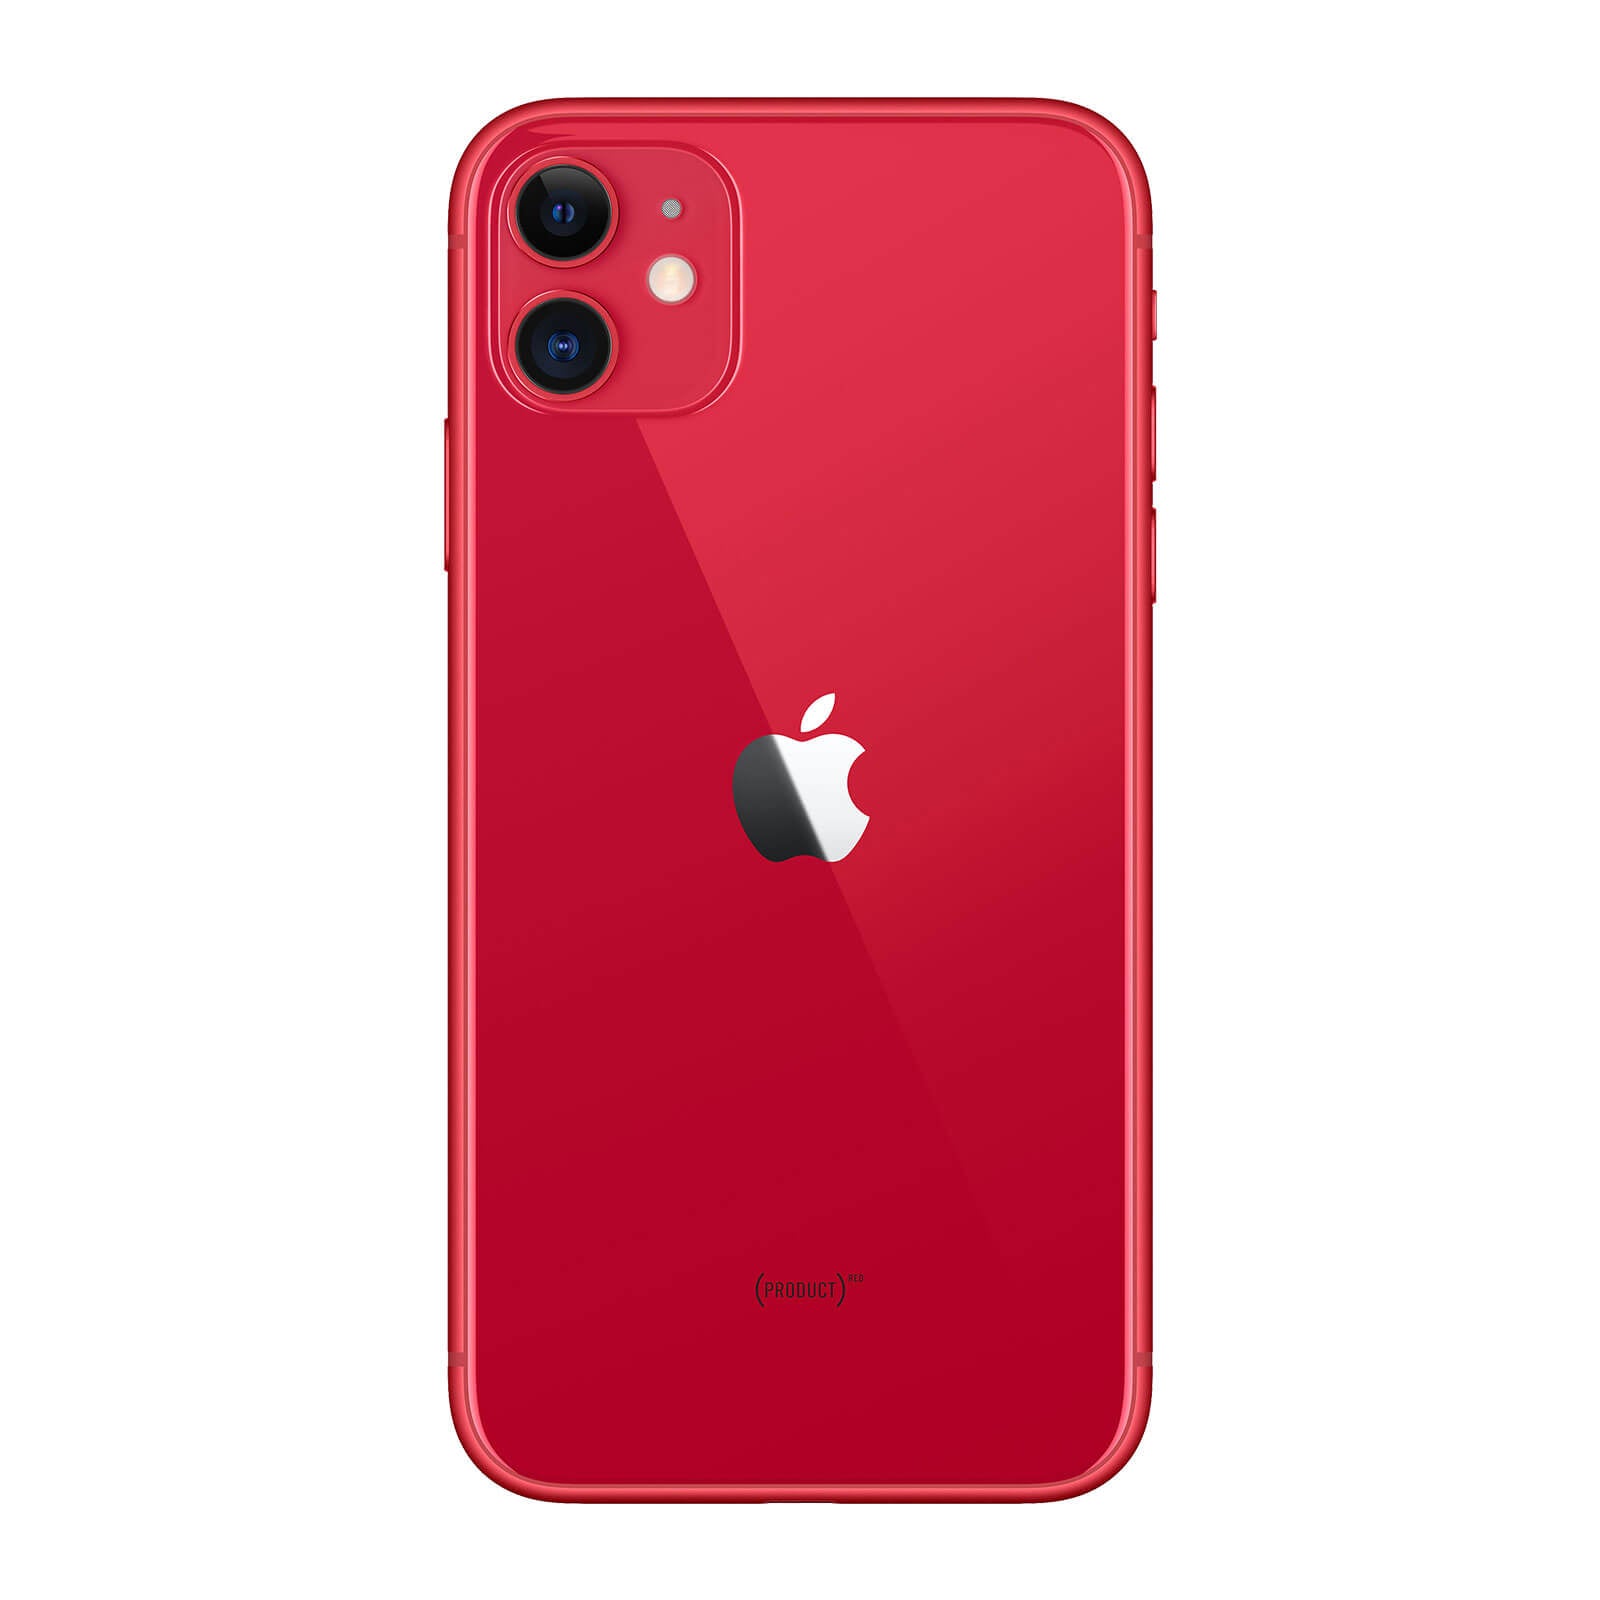 Apple iPhone 11 128GB Product Red Very Good - Verizon